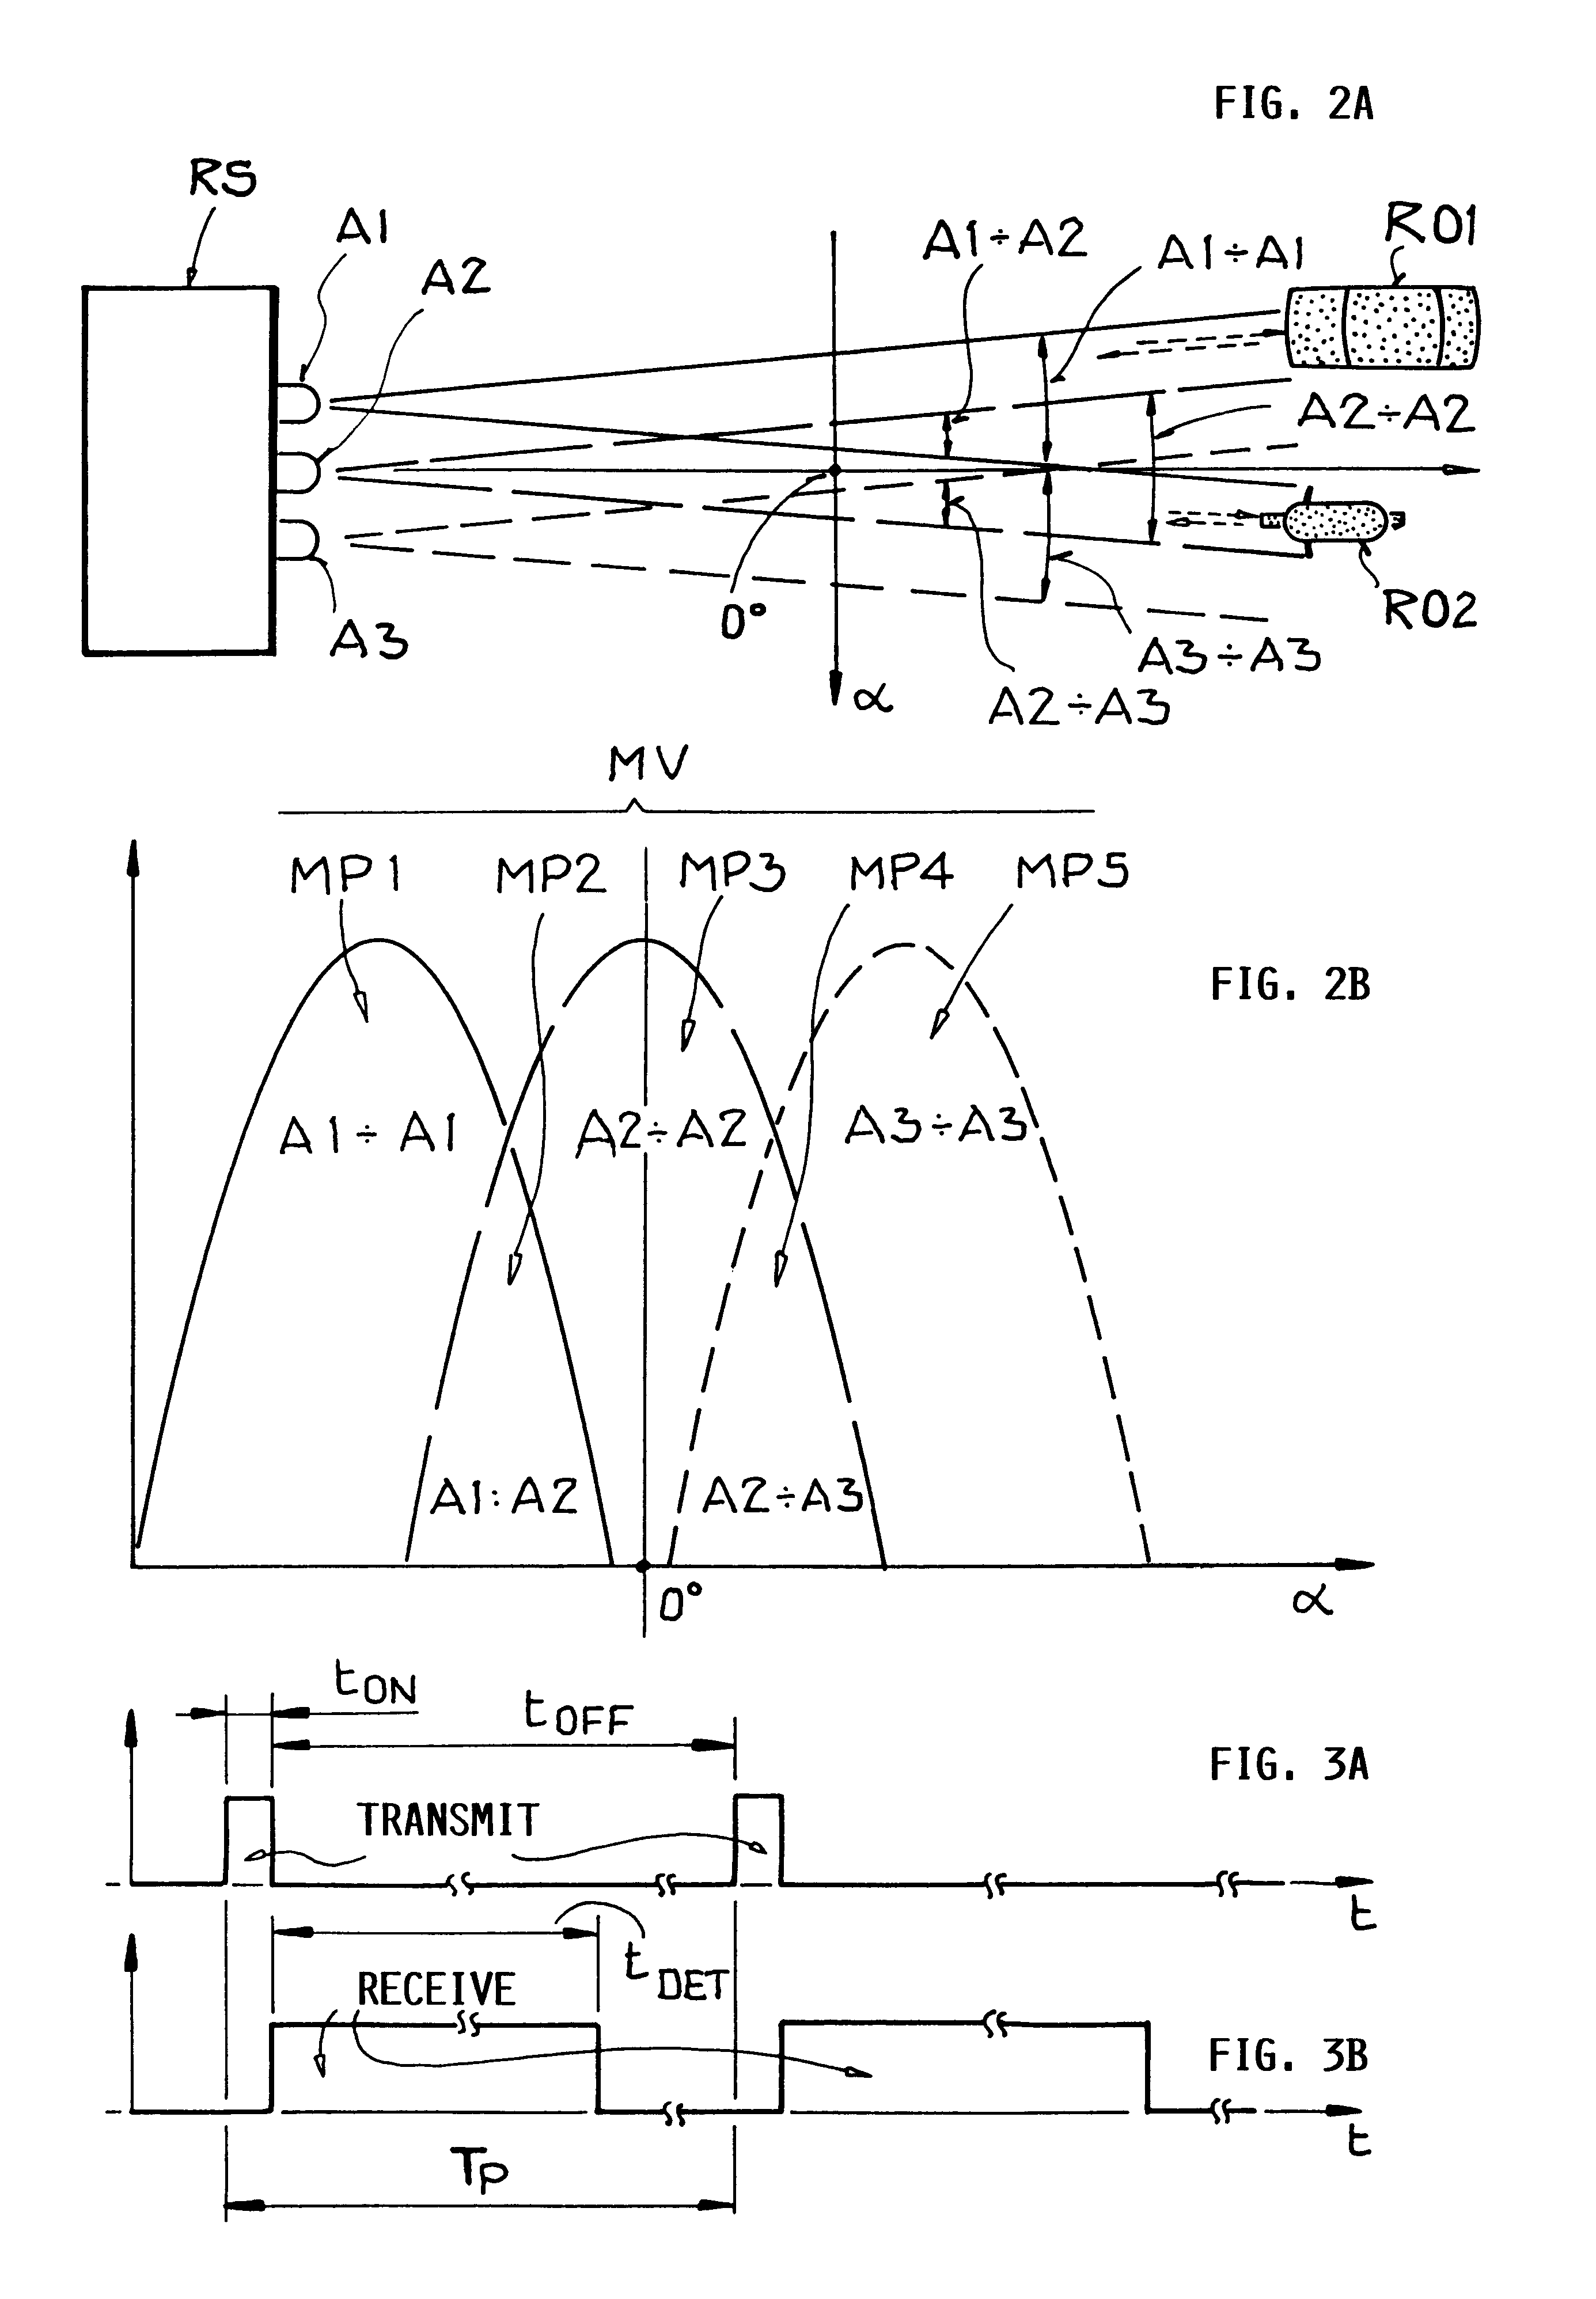 Method of operating a multi-antenna pulsed radar system